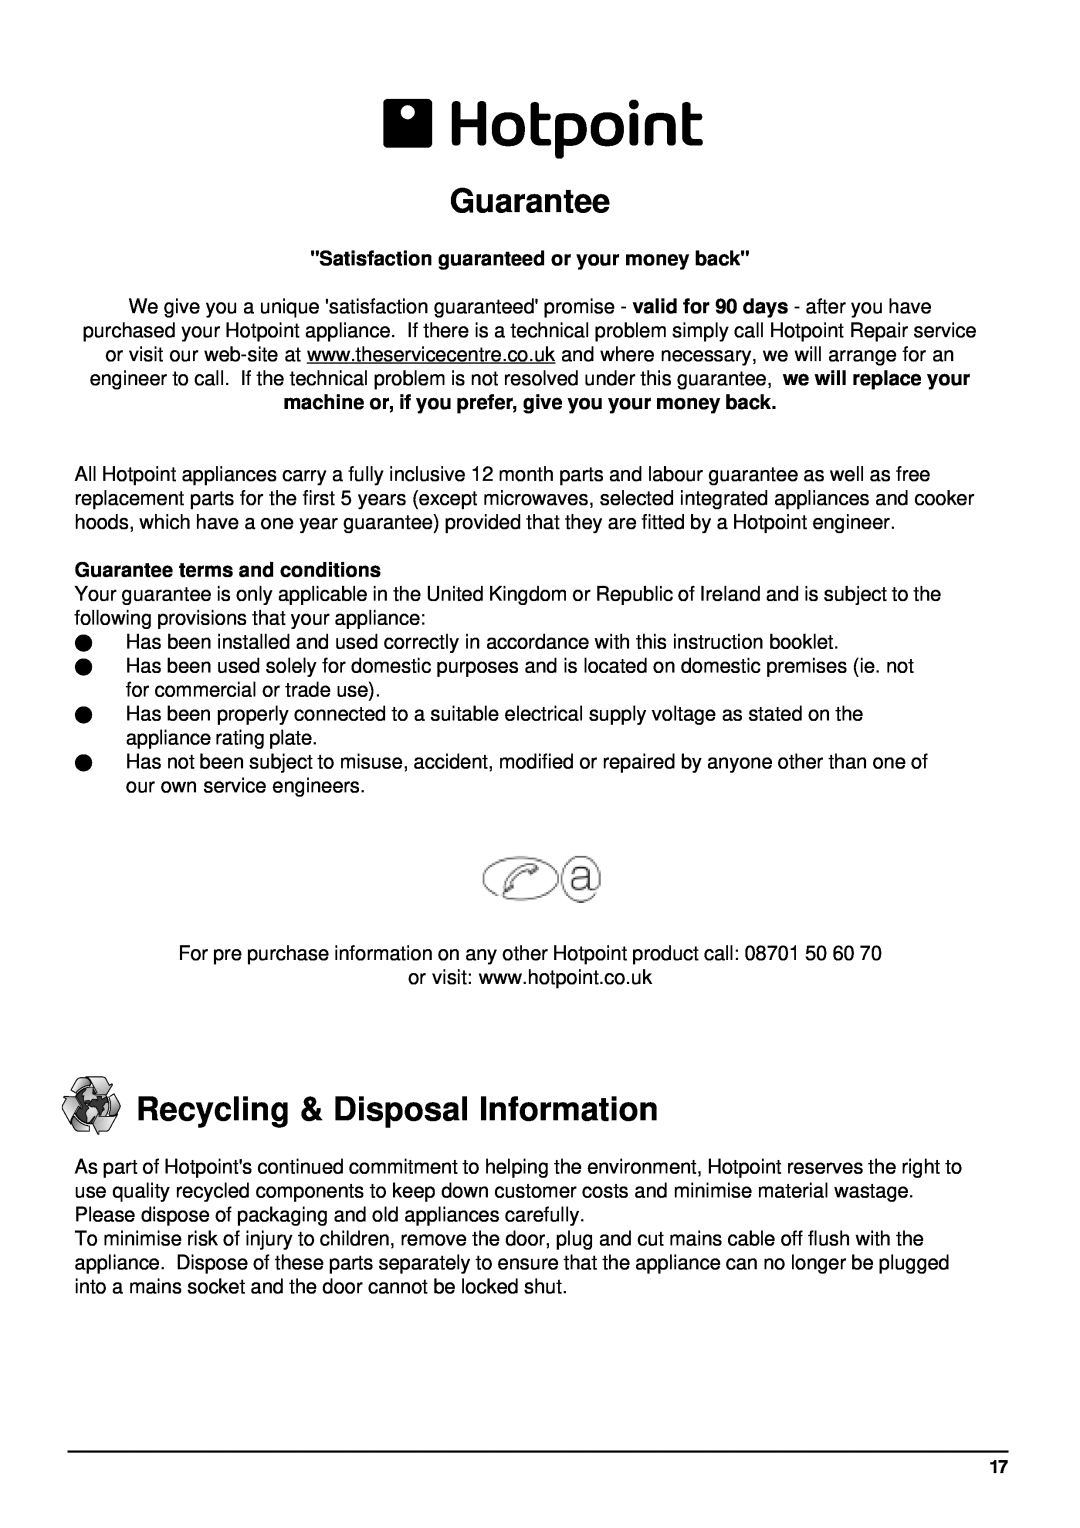 Hotpoint BFV620 manual Guarantee, Recycling & Disposal Information, Satisfaction guaranteed or your money back 